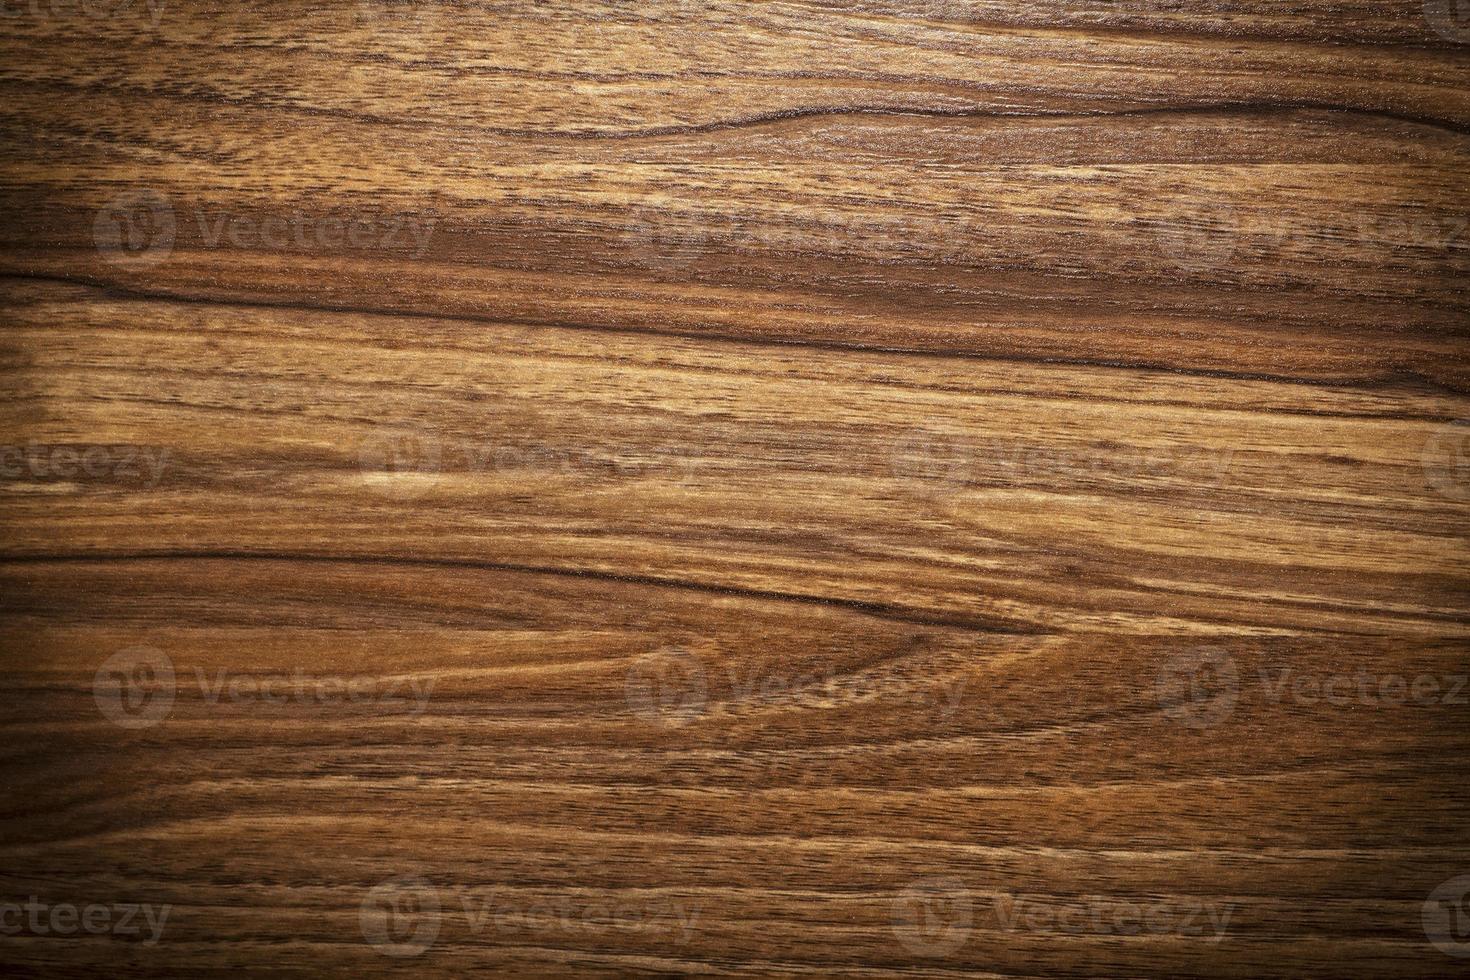 Nice wooden floor for background photo